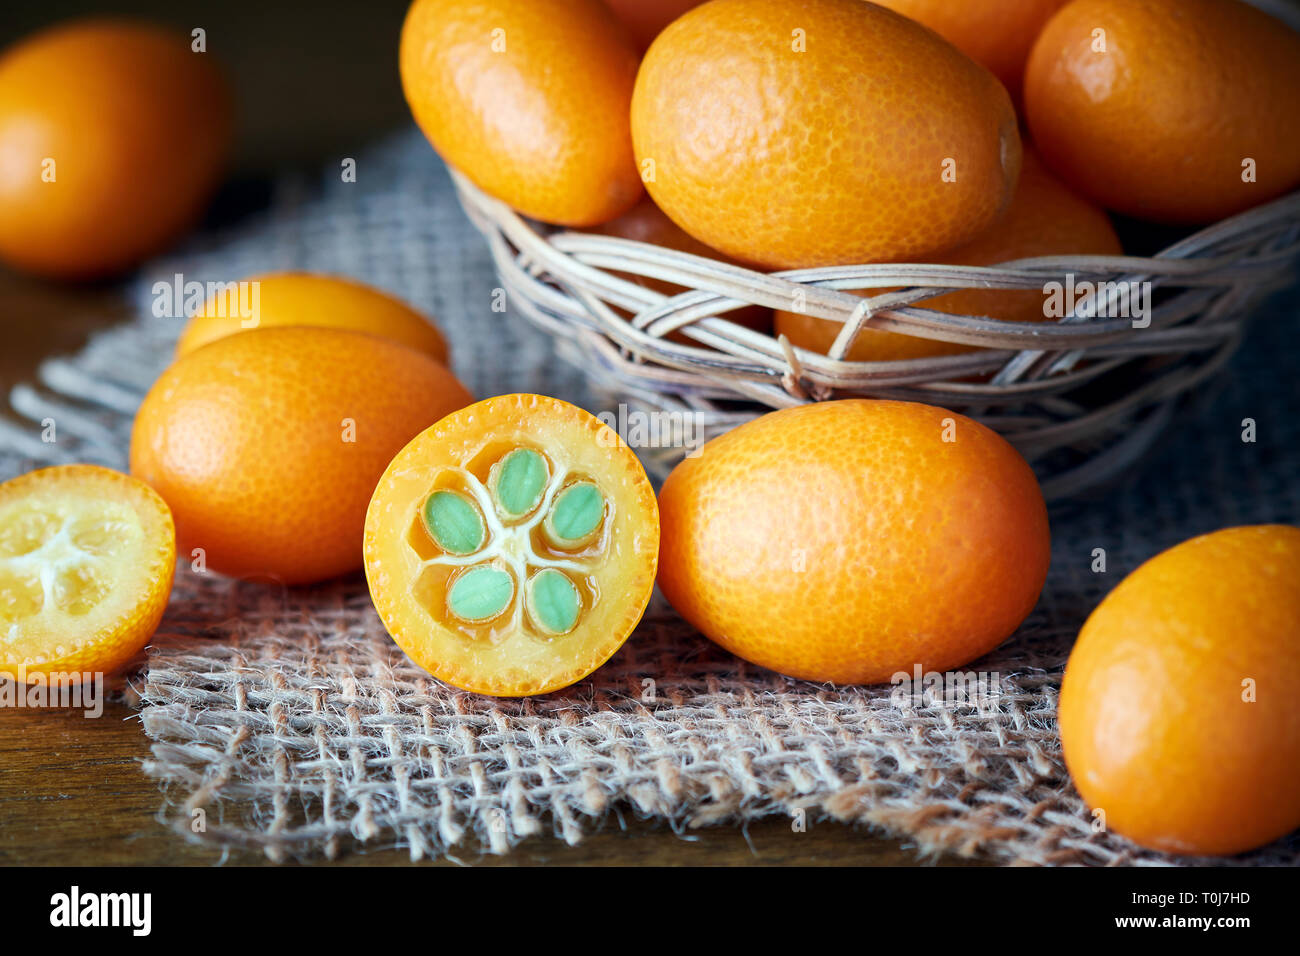 Kumquats or cumquats (Citrus japonica) on wooden background Stock Photo